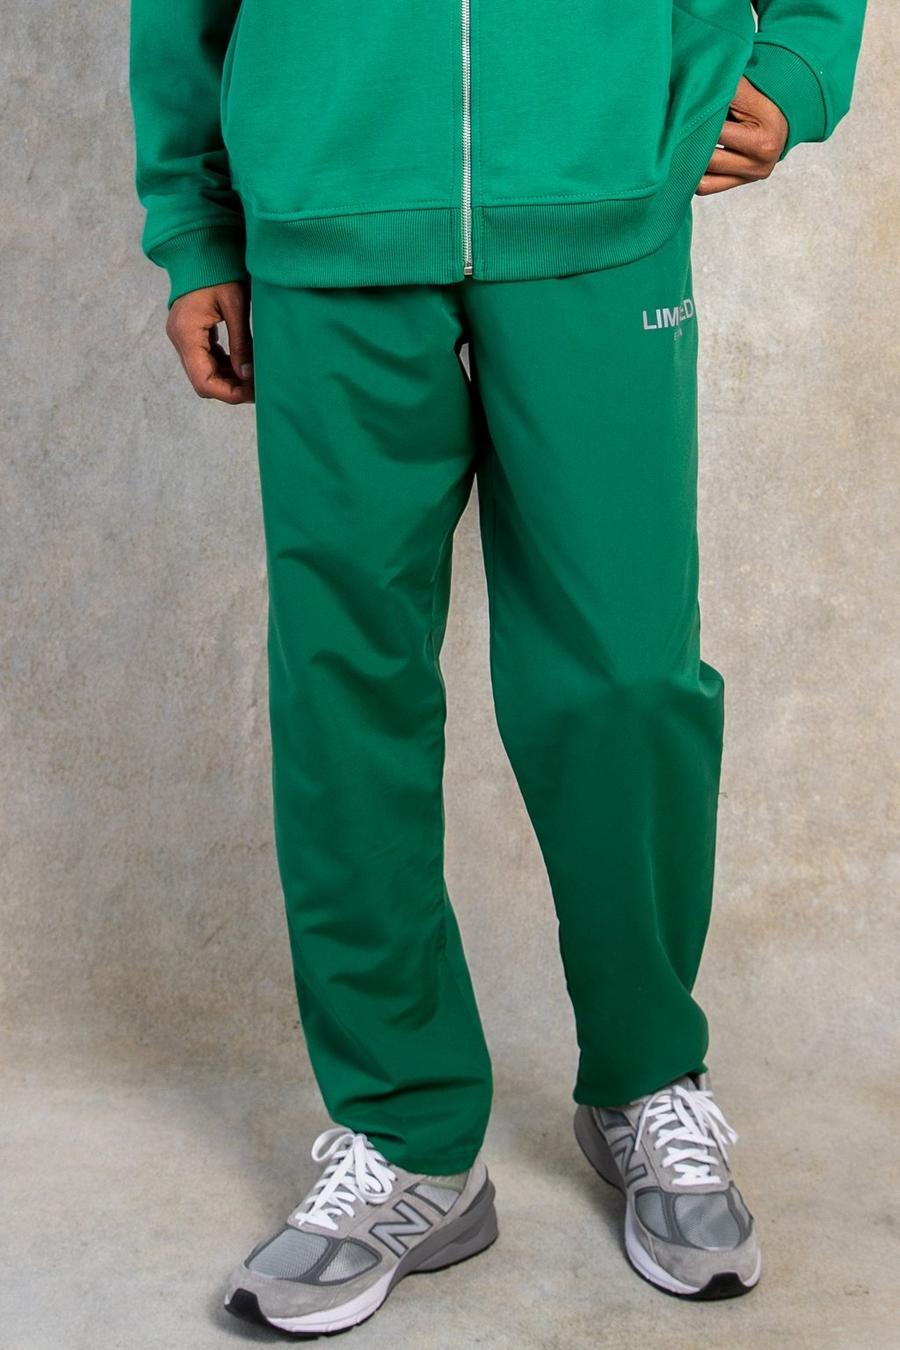 Pantaloni dritti Limited in Shell effetto velluto, Green gerde